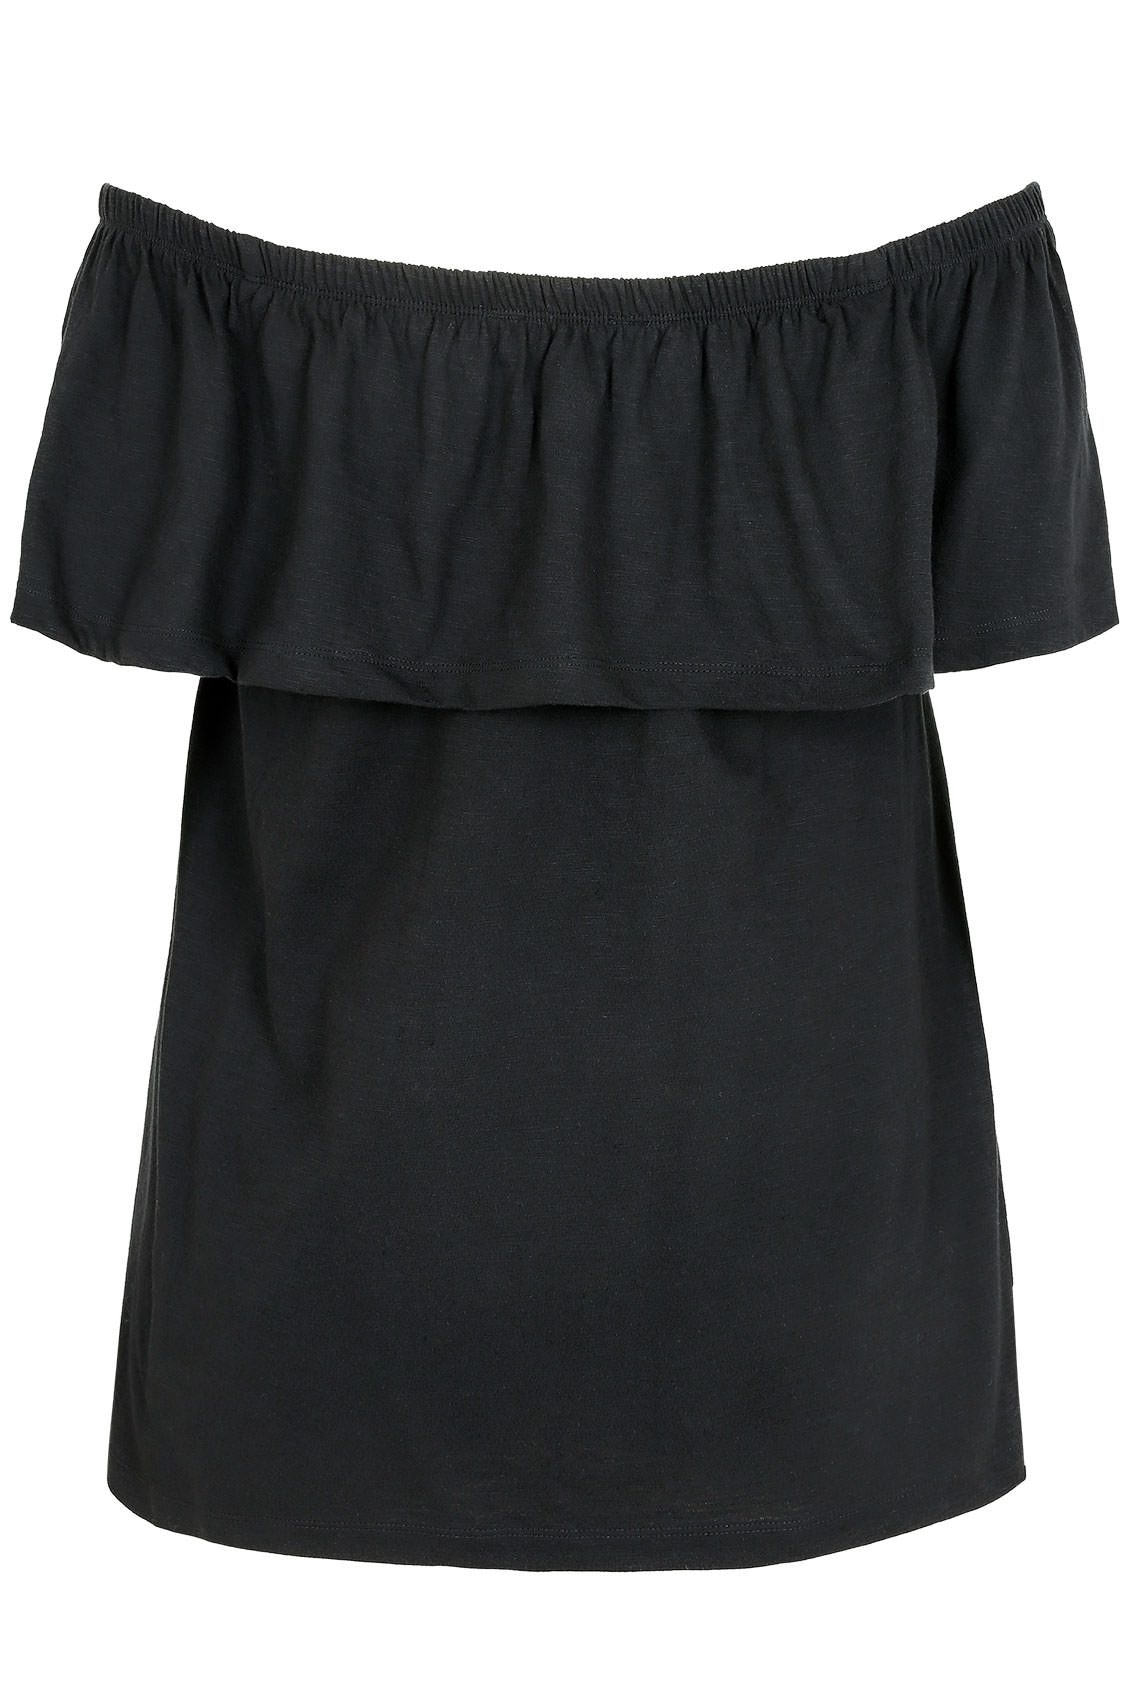 Black Frill Bardot Jersey Top, Plus size 16 to 36